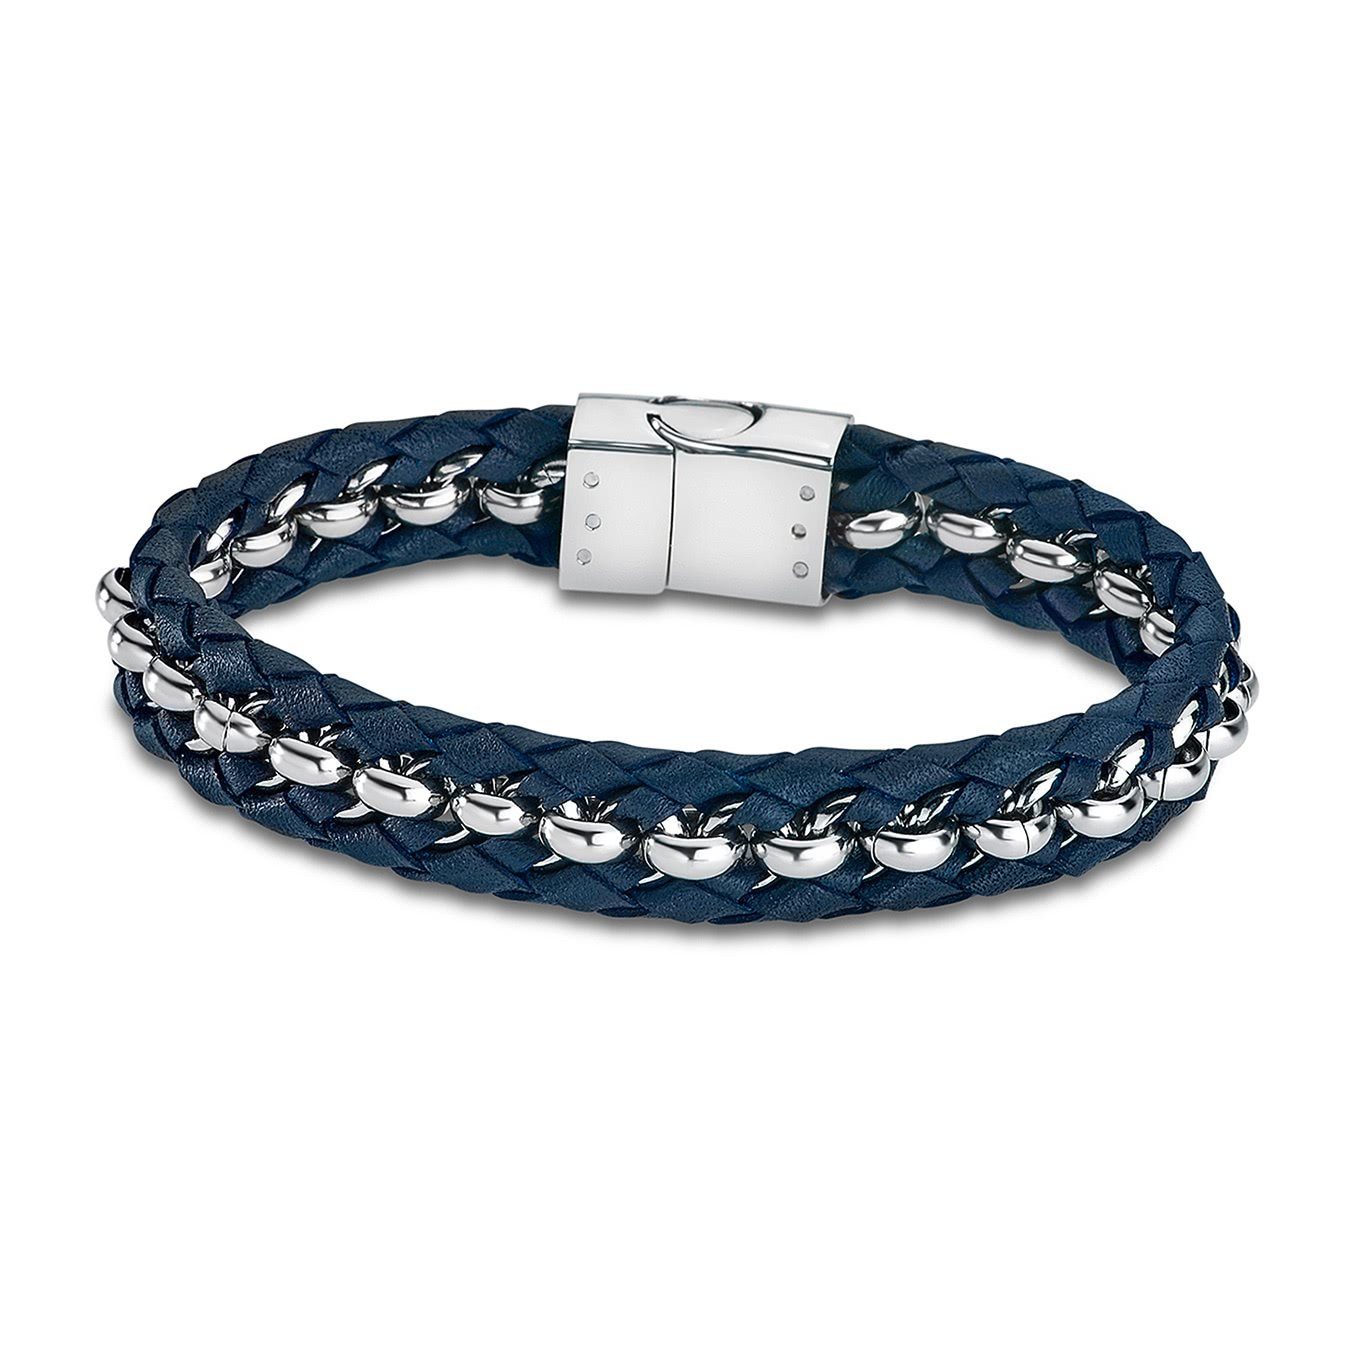 Edelstahl Lotus Armband Echtleder Armband blau Steel), Style silber Herren Style für (Stainless aus Lotus (Armband),